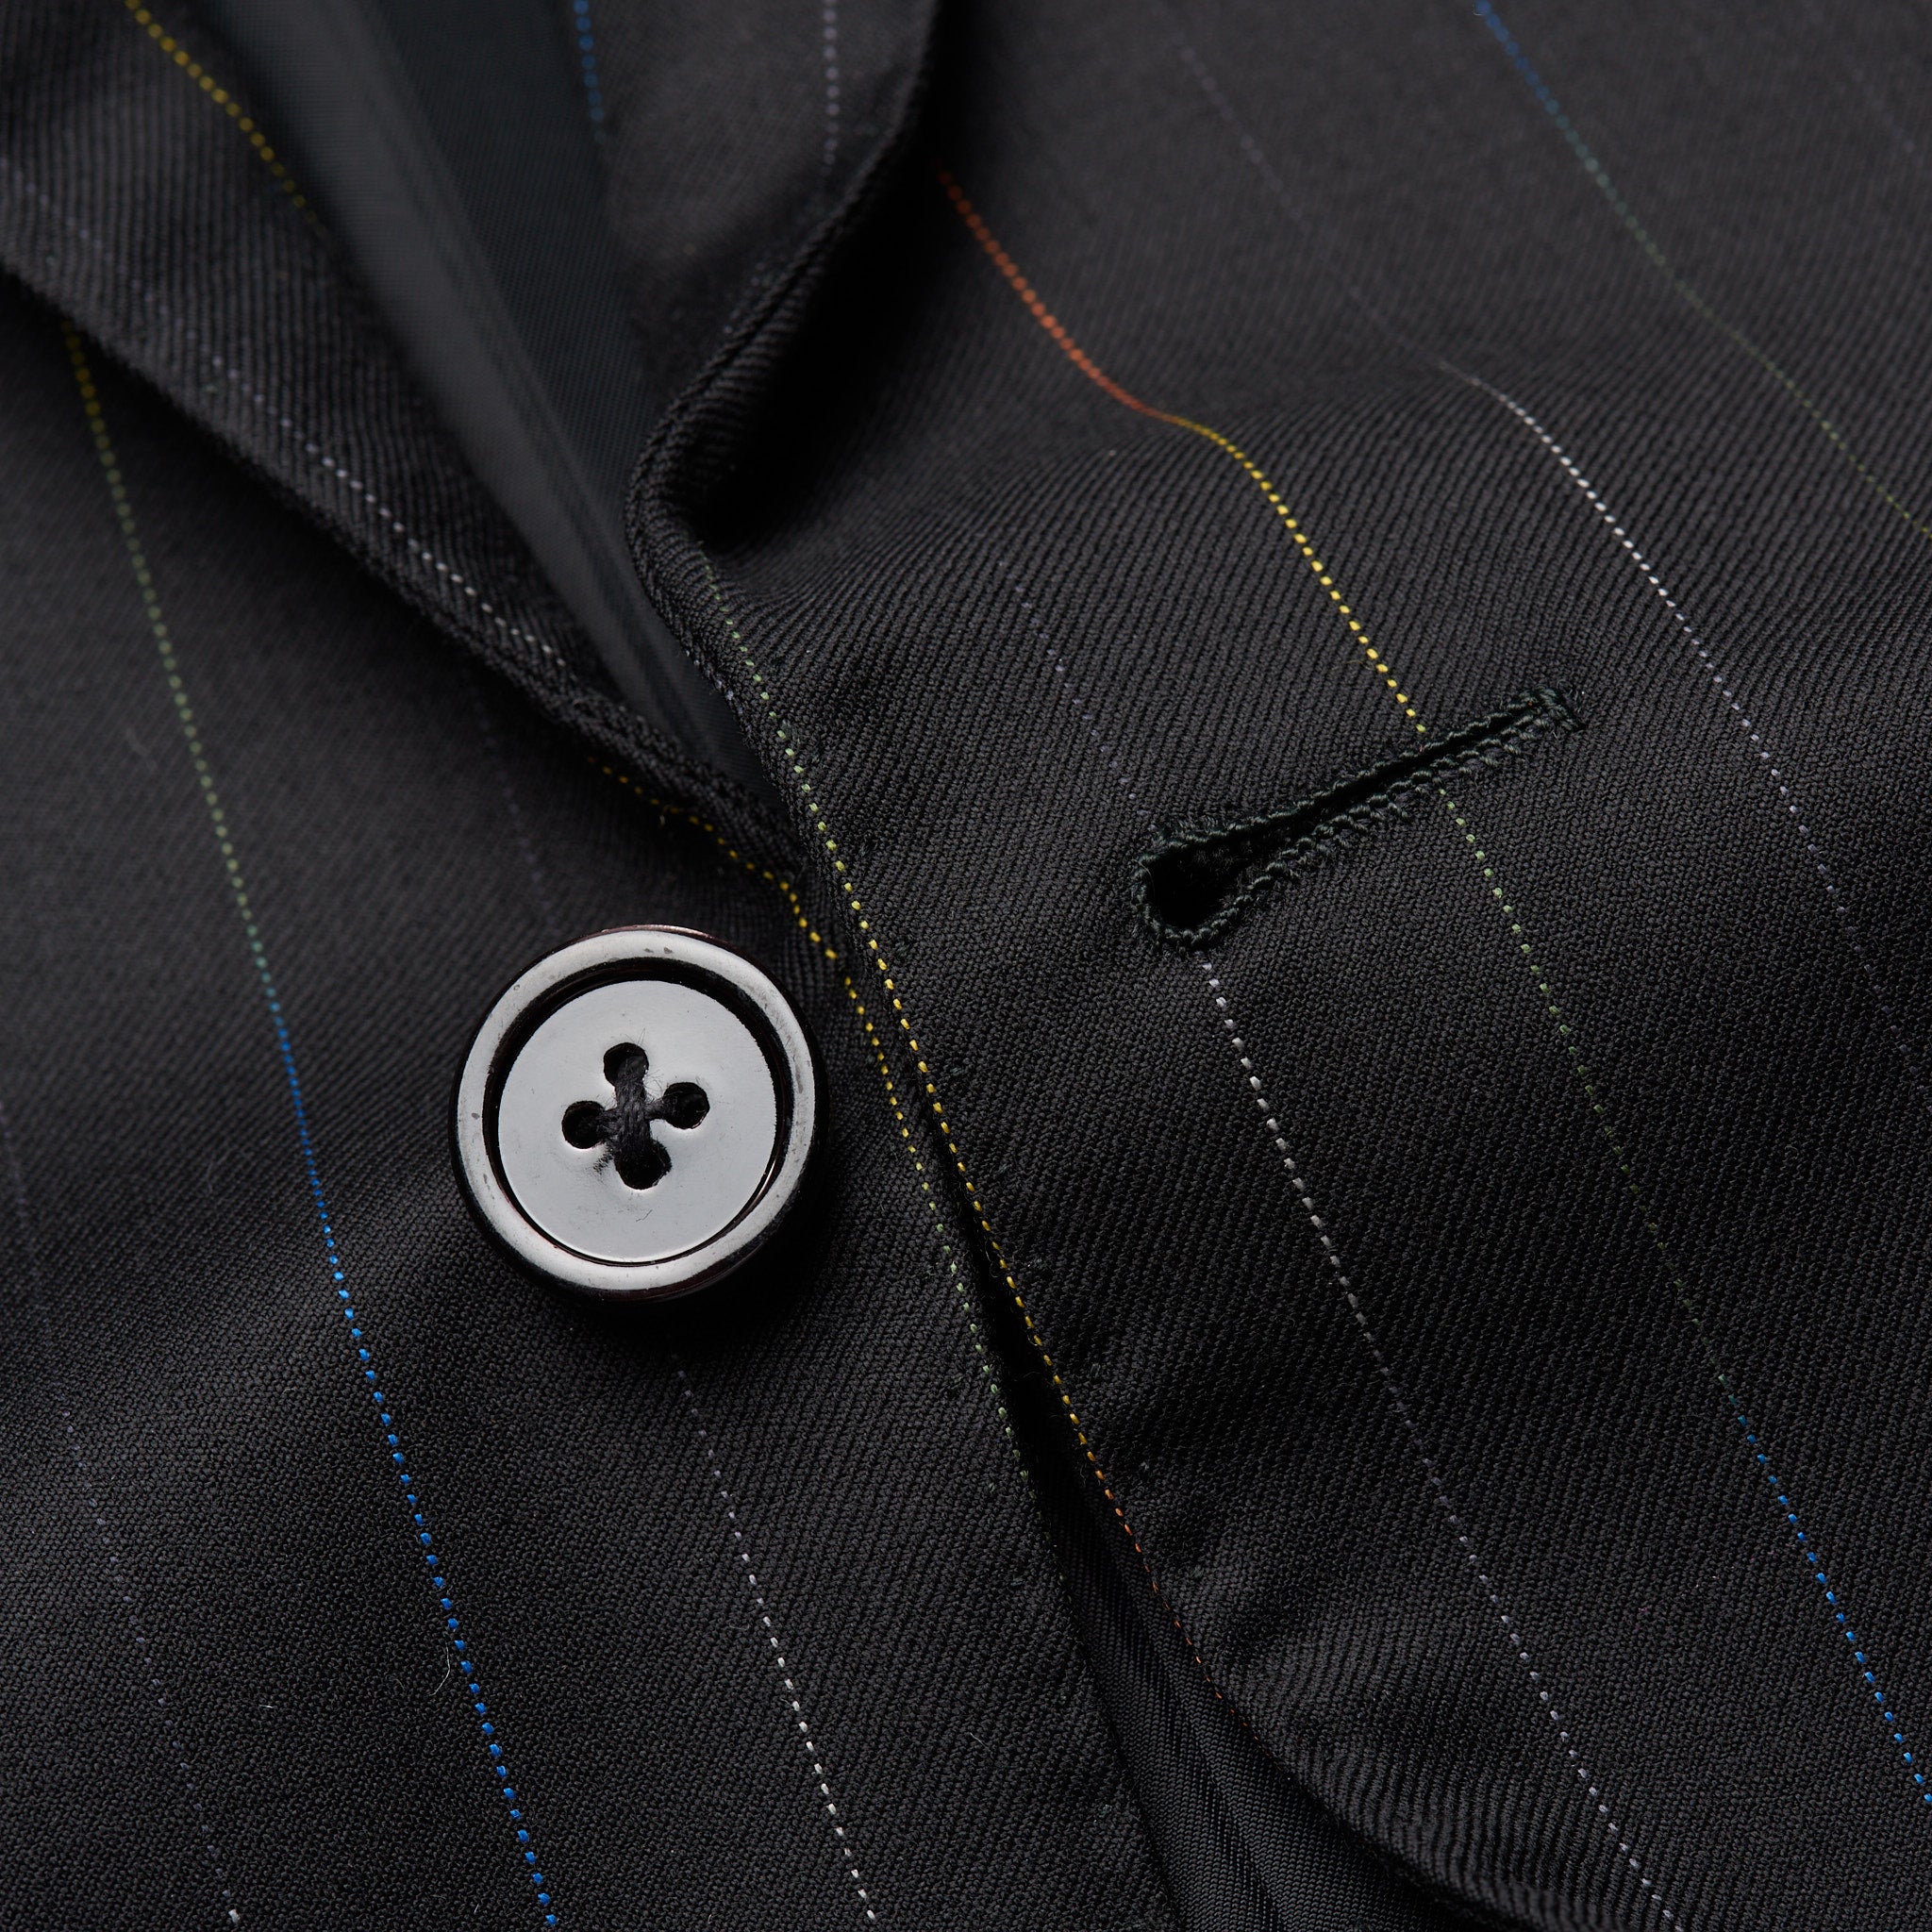 D'AVENZA Handmade Black Striped Wool Super 150's Suit EU 54 NEW US 44 D'AVENZA